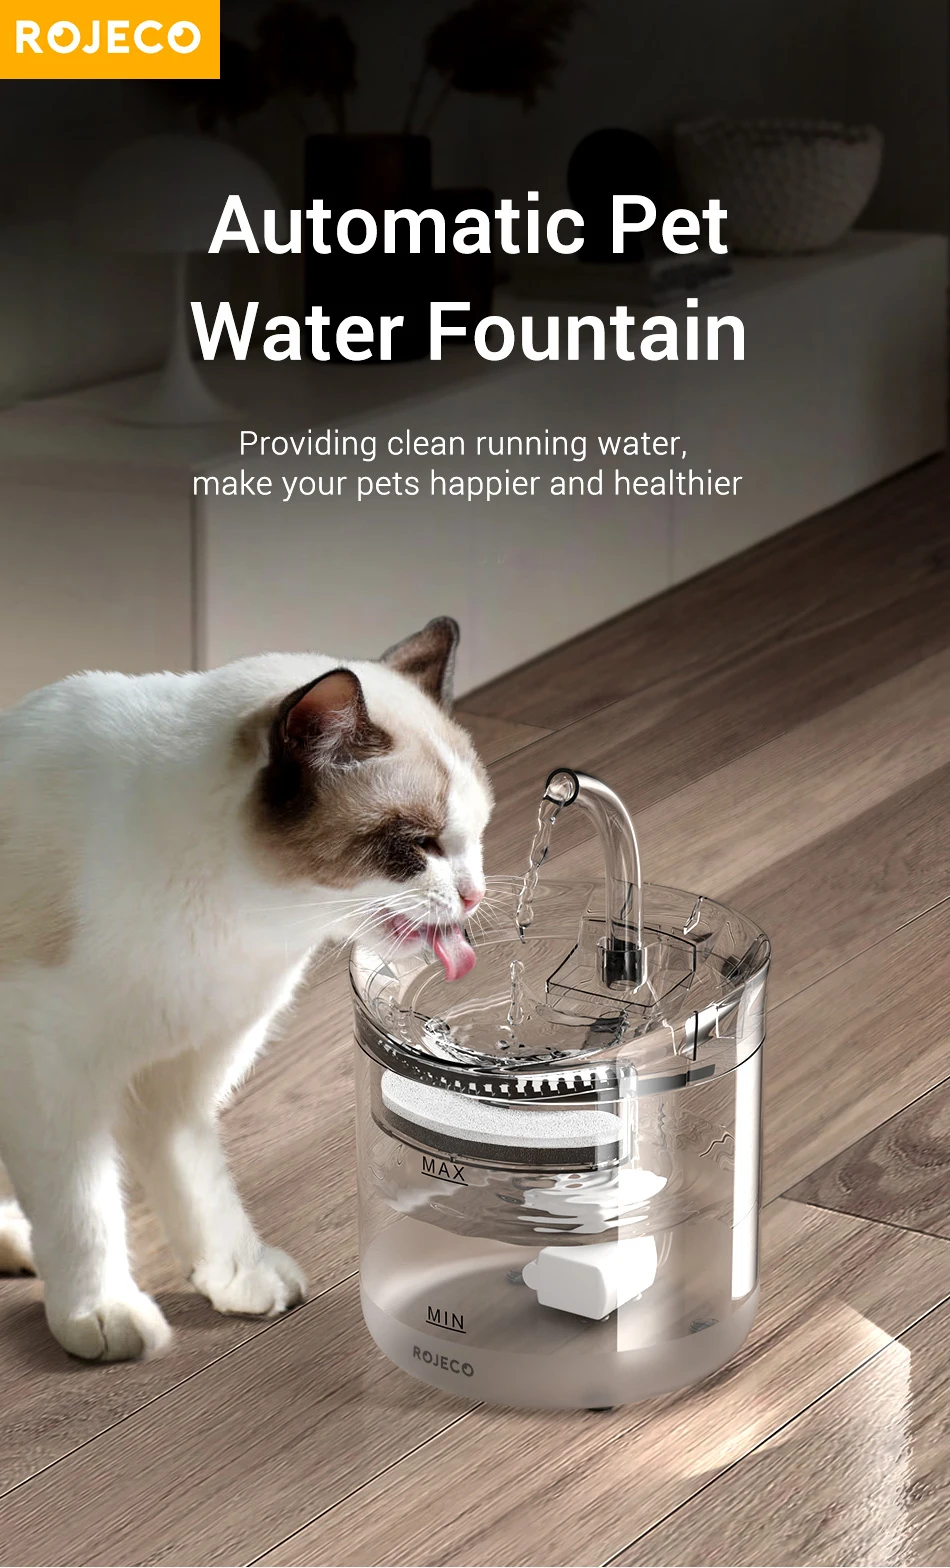 Rojeco gato fonte de água automático pet